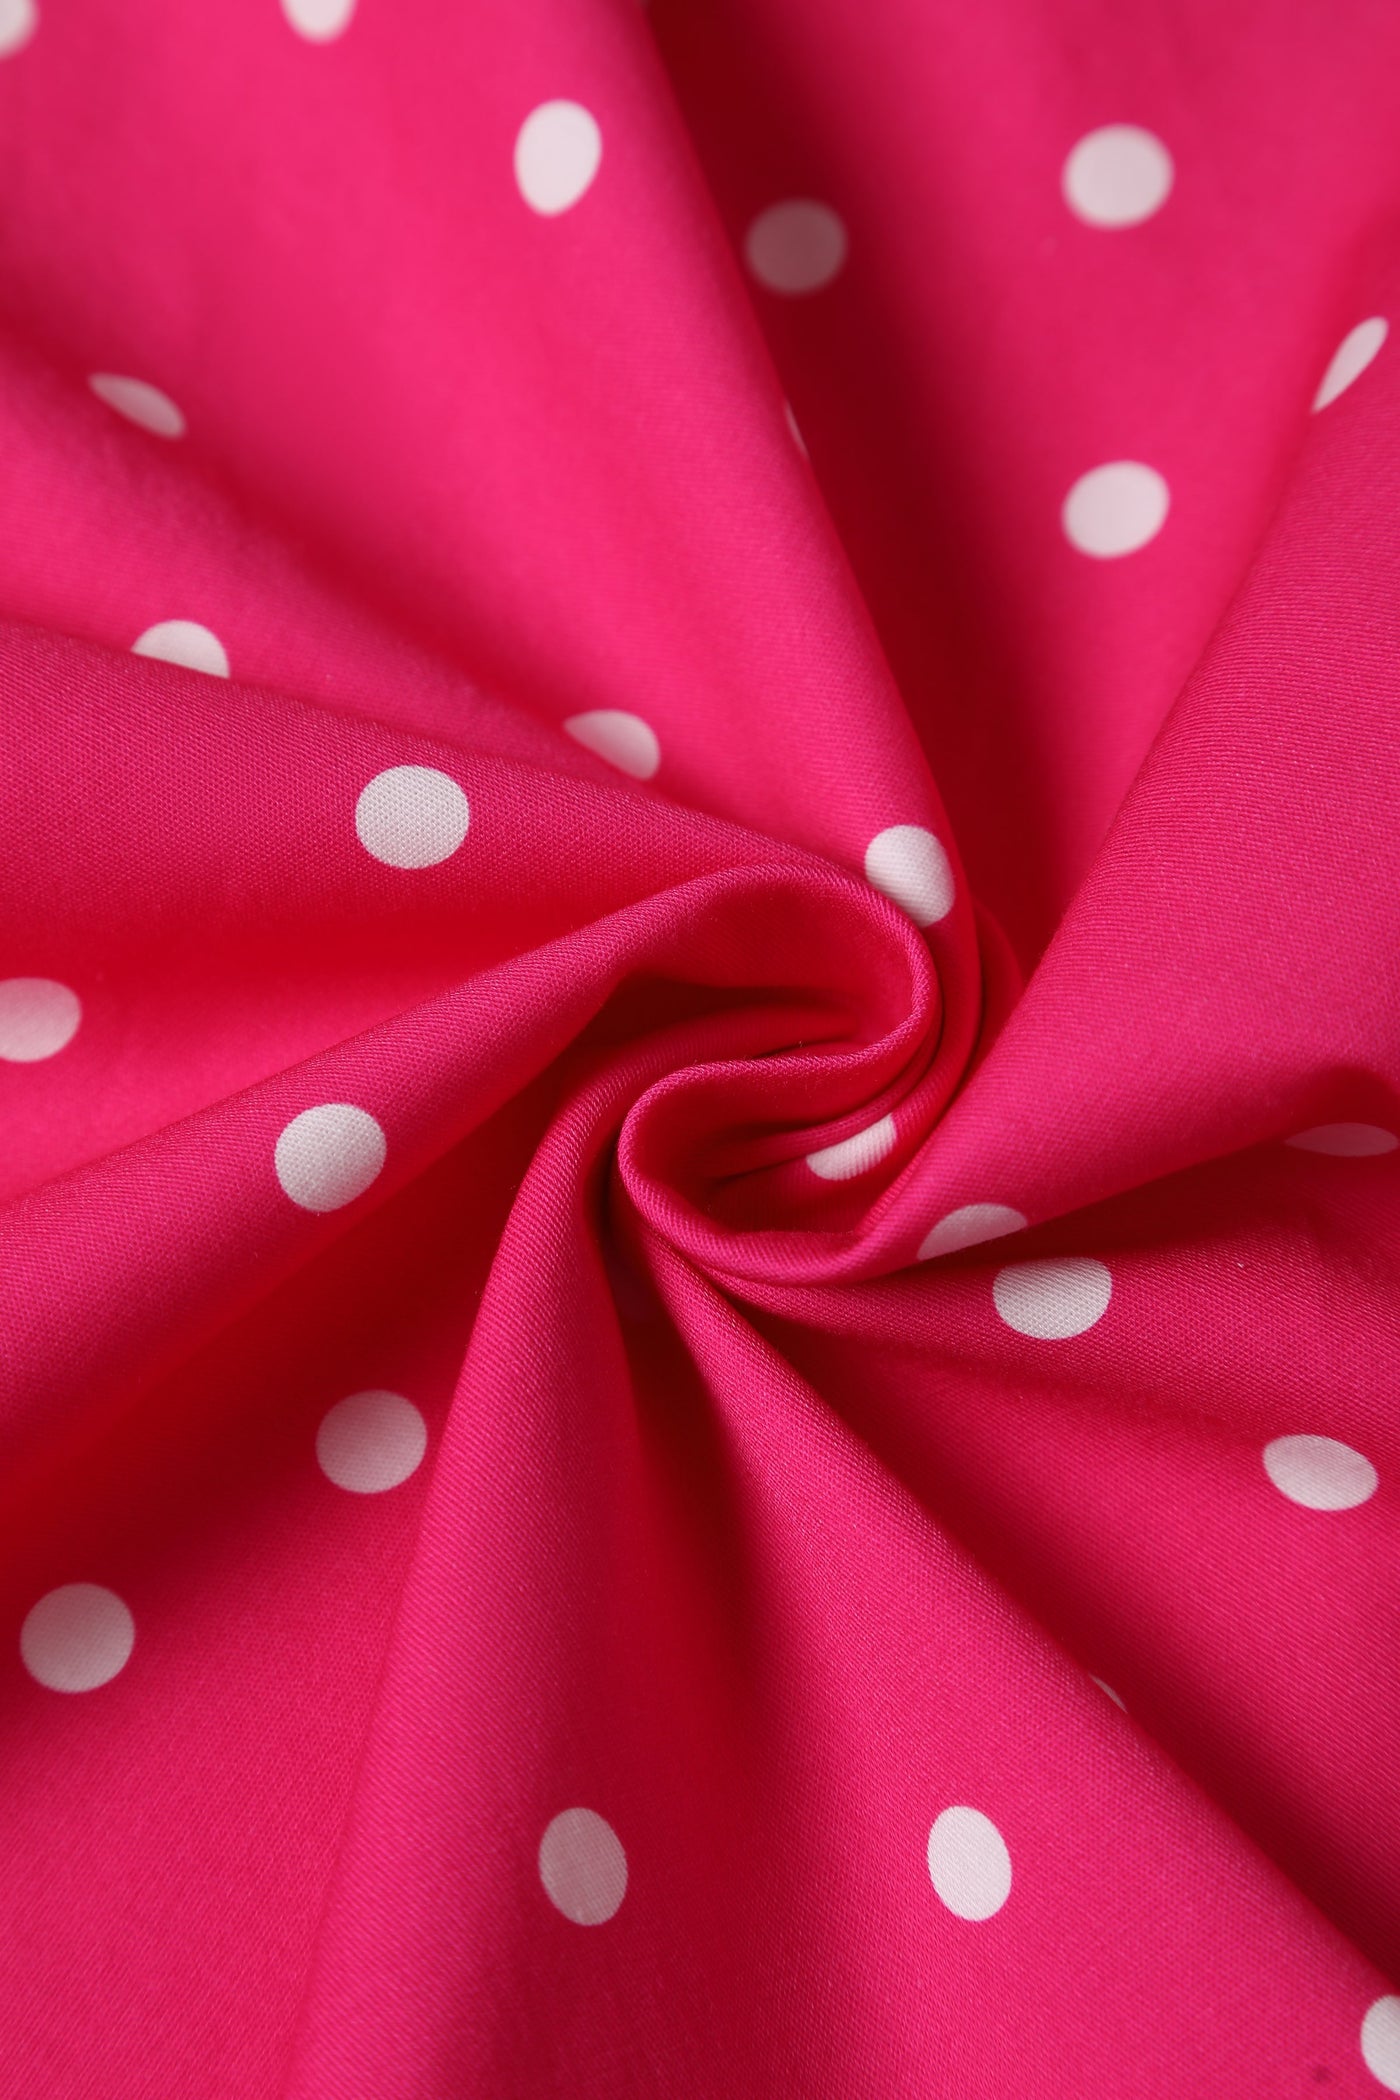 Hot Pink Polka Dot Swing Dress